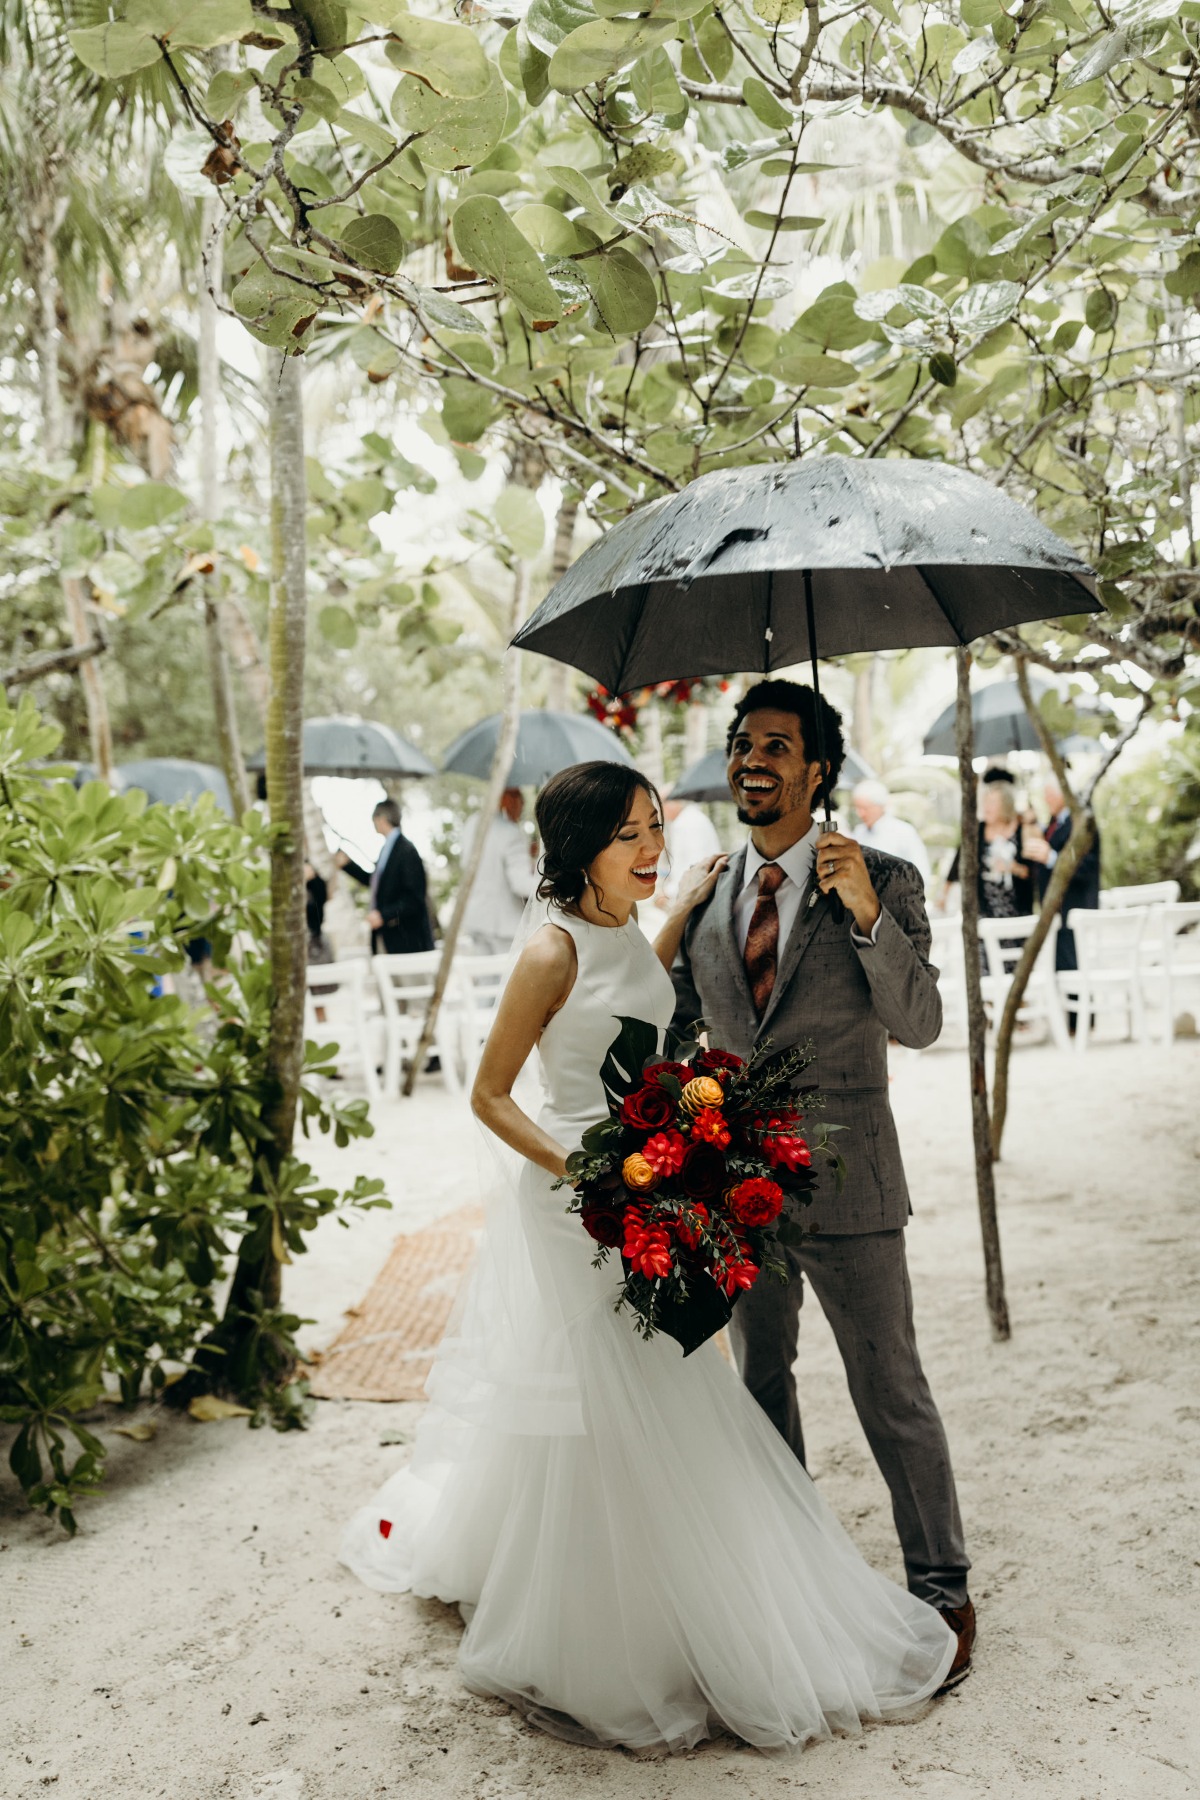 tropical rainstorm at this Tulum wedding